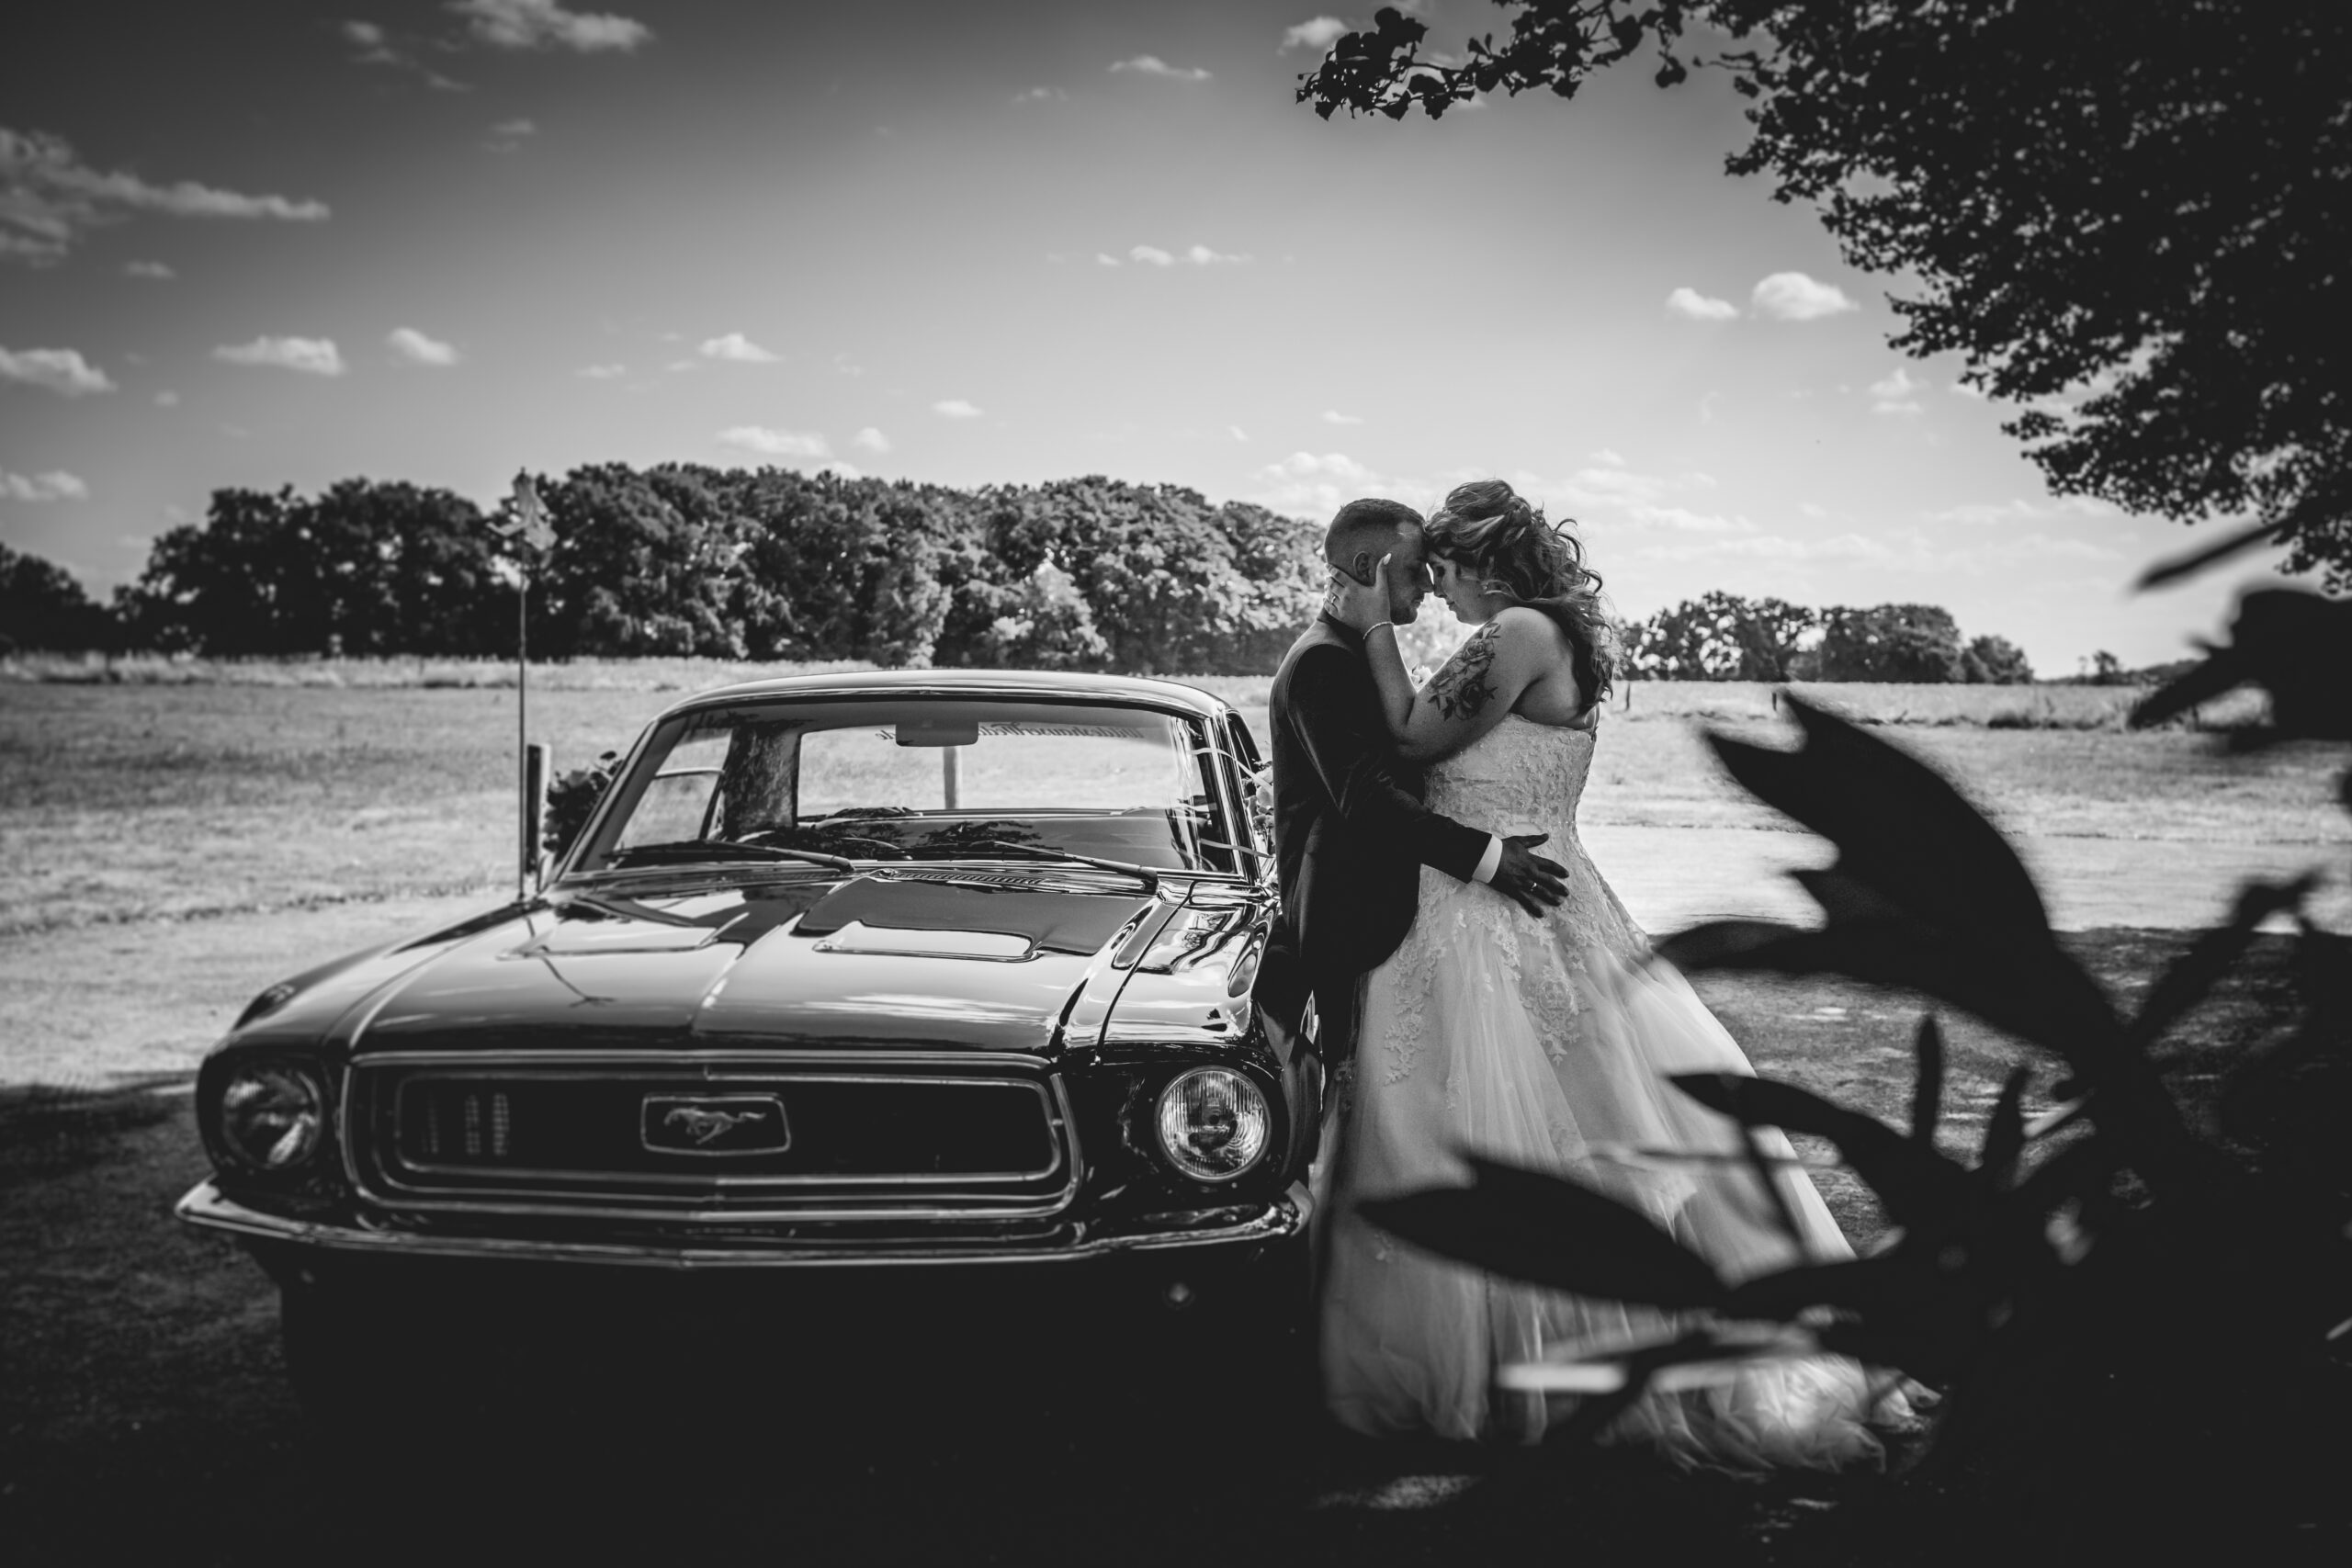 Brautpaar steht rechts neben einen Ford Mustang und guckt sich liebevoll an